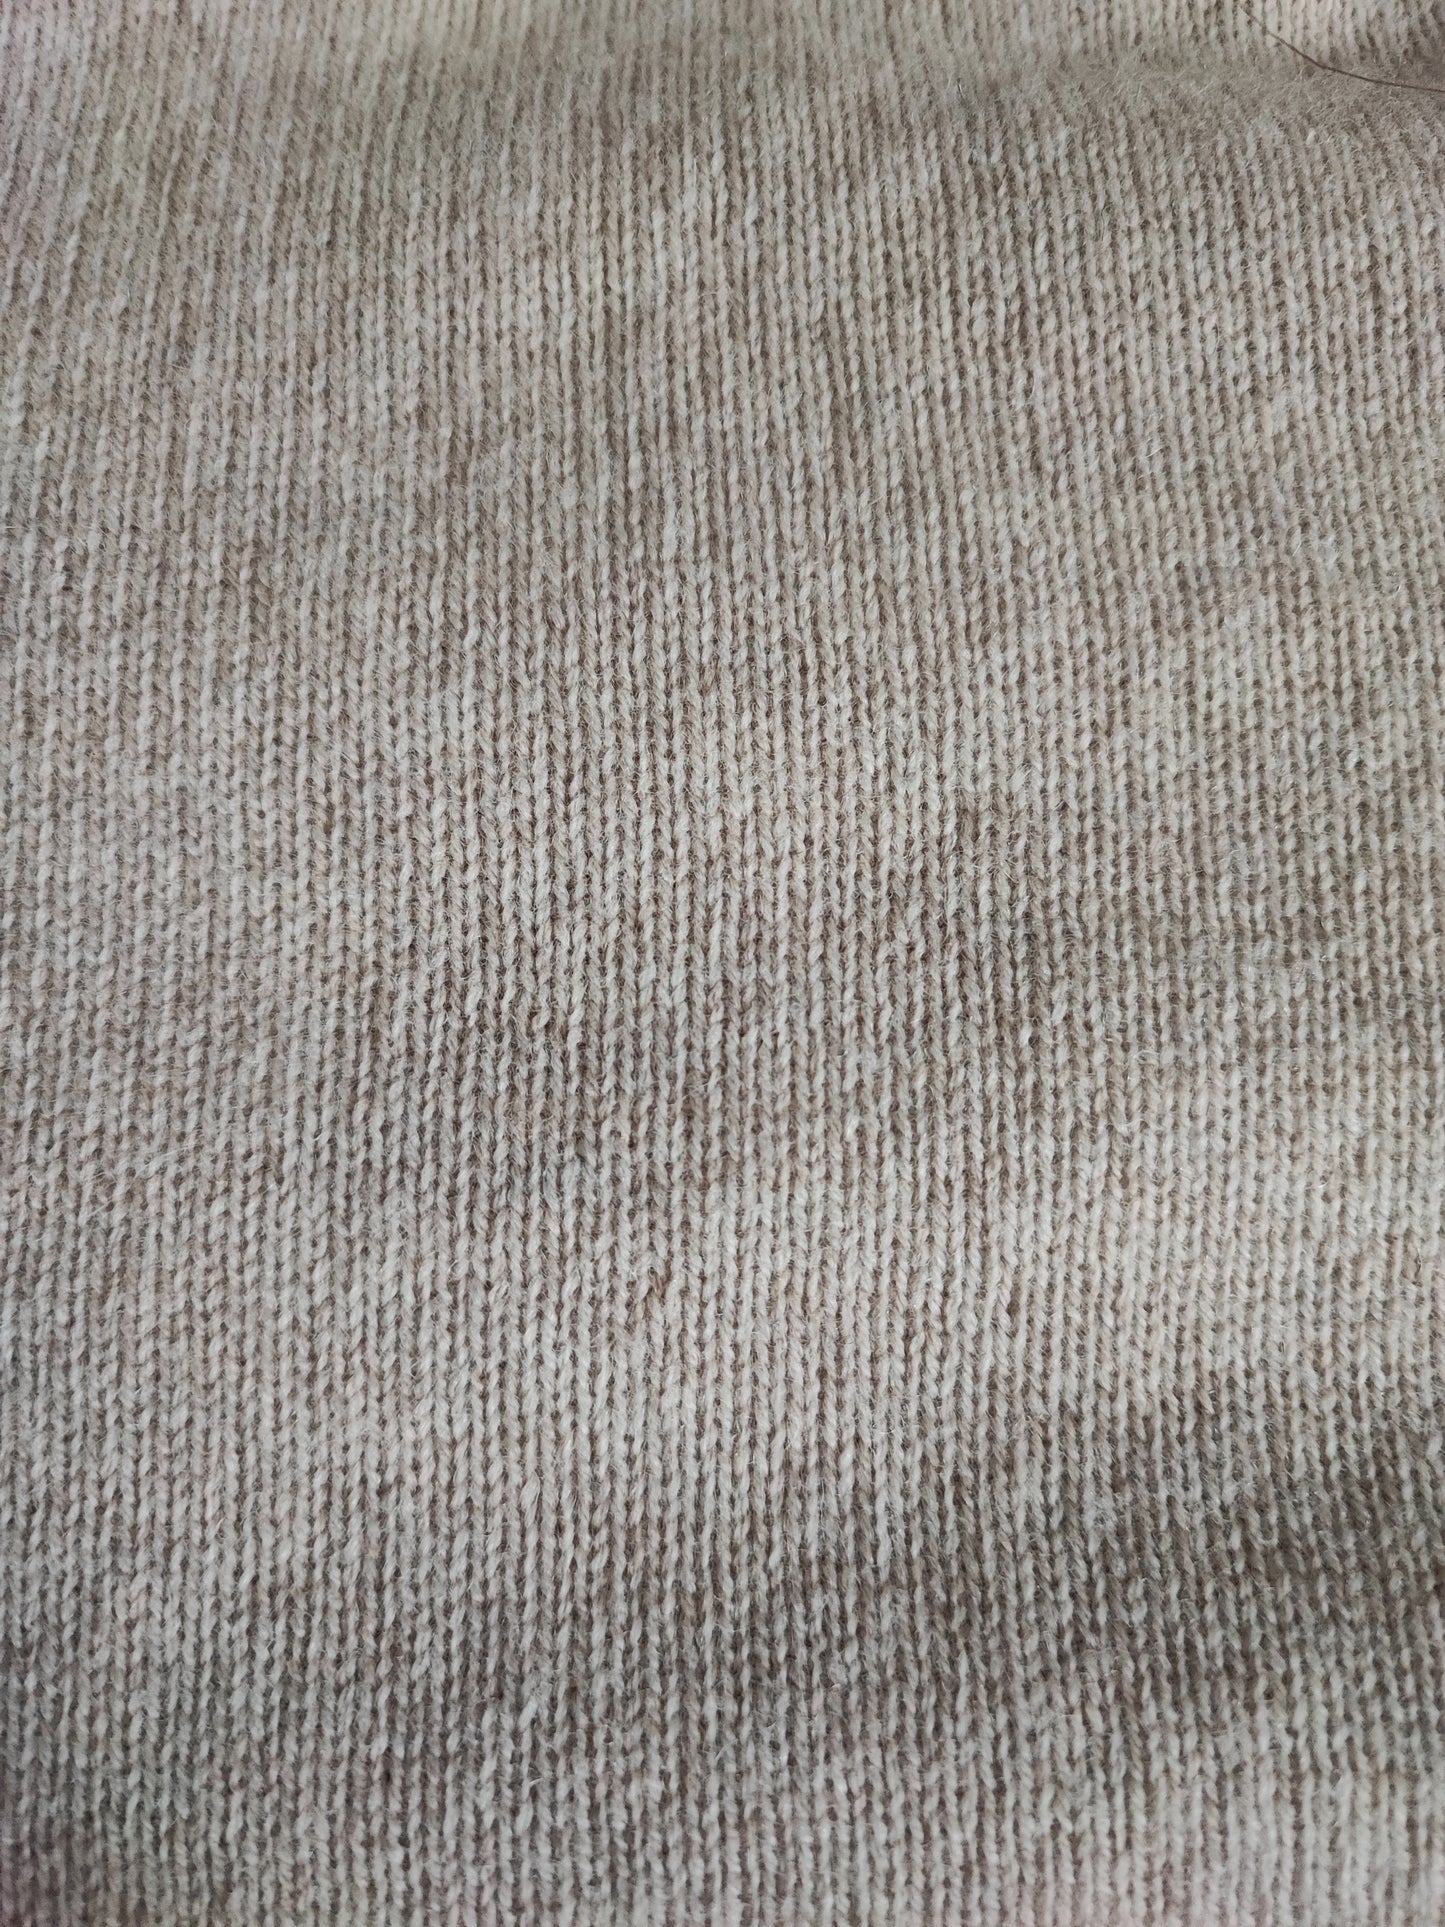 Pulloverkleid Lammwolle sand Gr. M / Modell 6